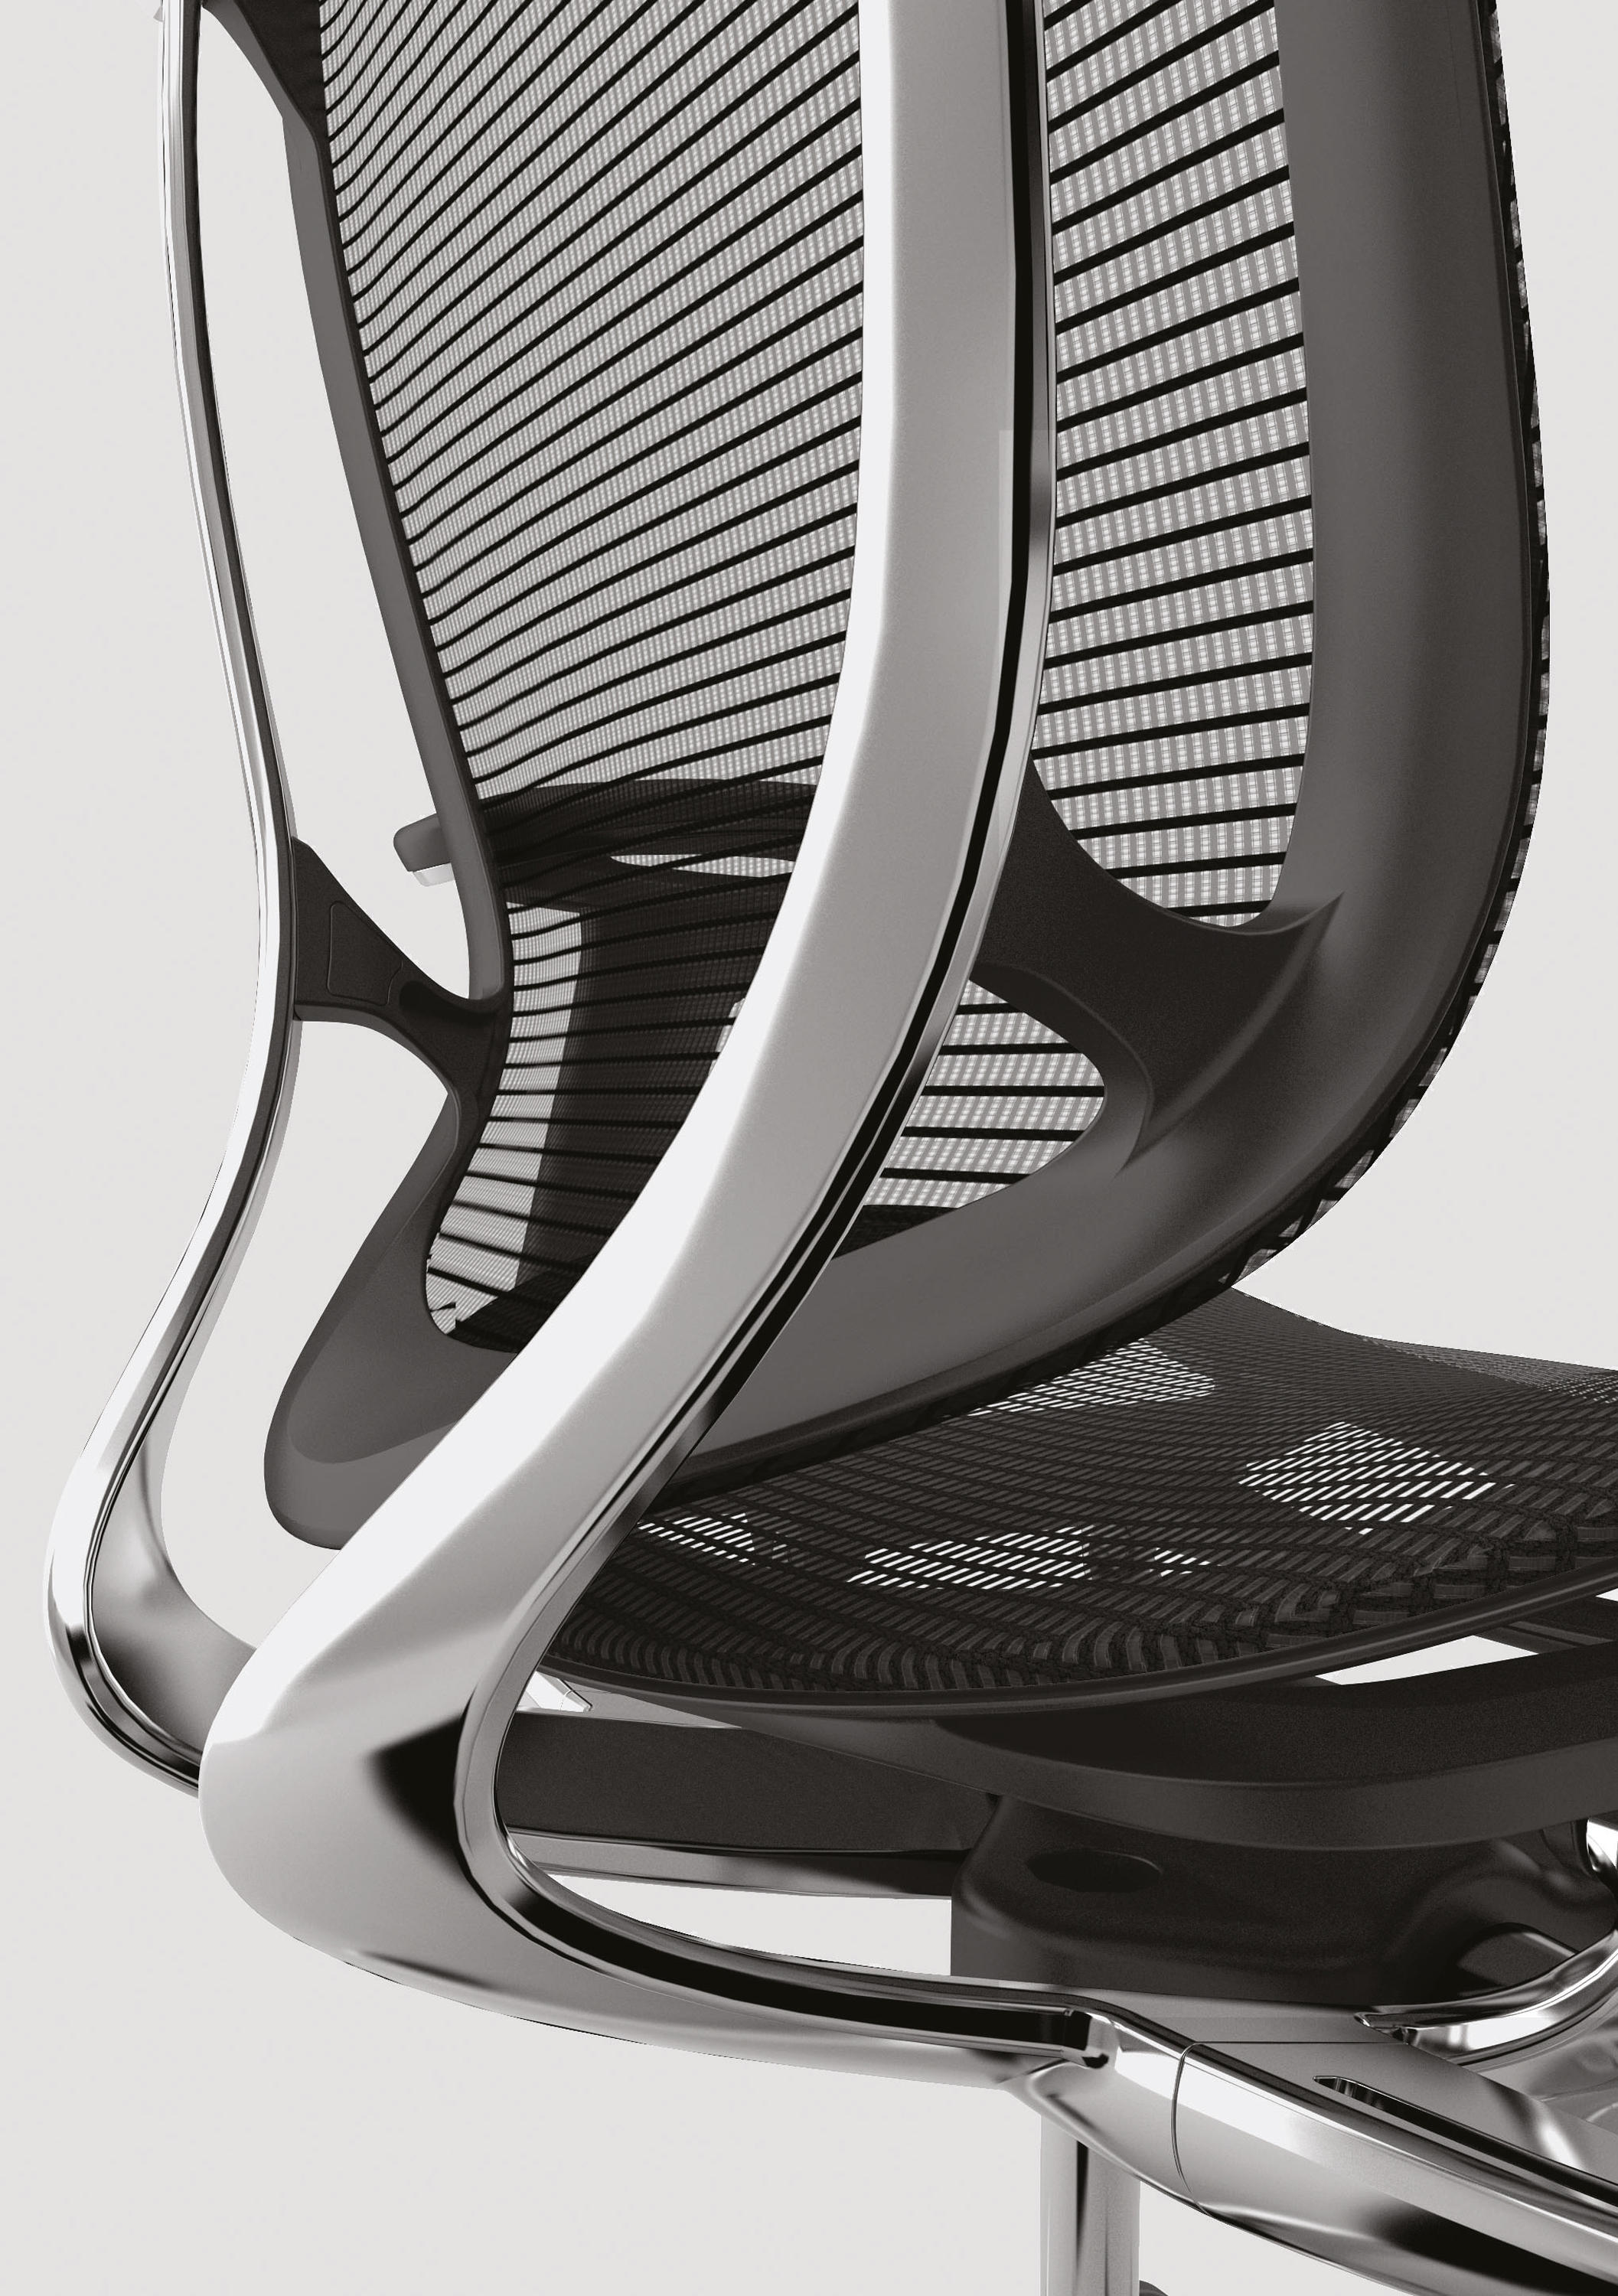 NUOVA CONTESSA - Office chairs from Teknion | Architonic